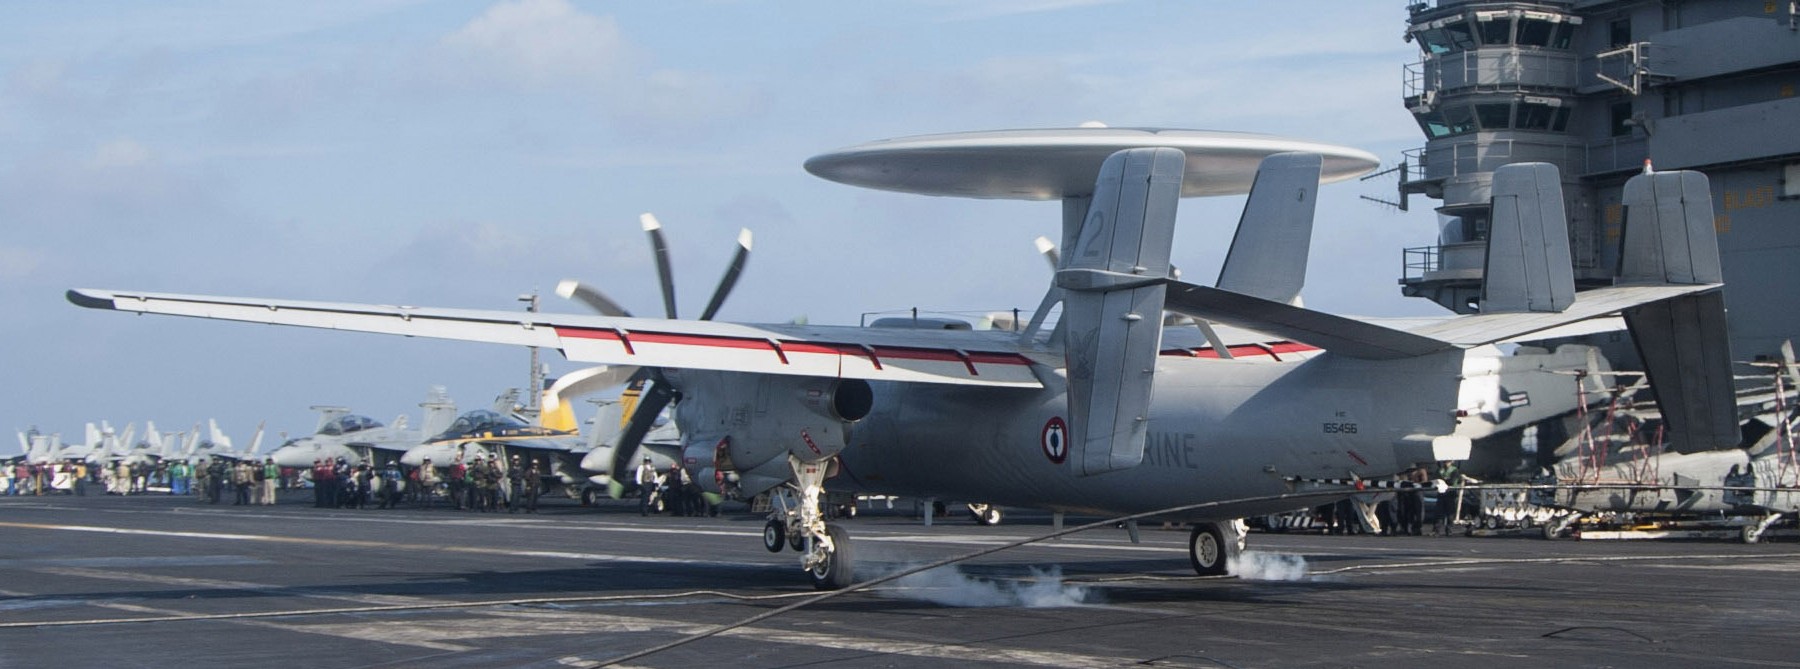 e-2c hawkeye french navy marine nationale grumman aeronavale flottille 4f aircraft carrier charles de gaulle r-91 35 uss harry truman cvn-75